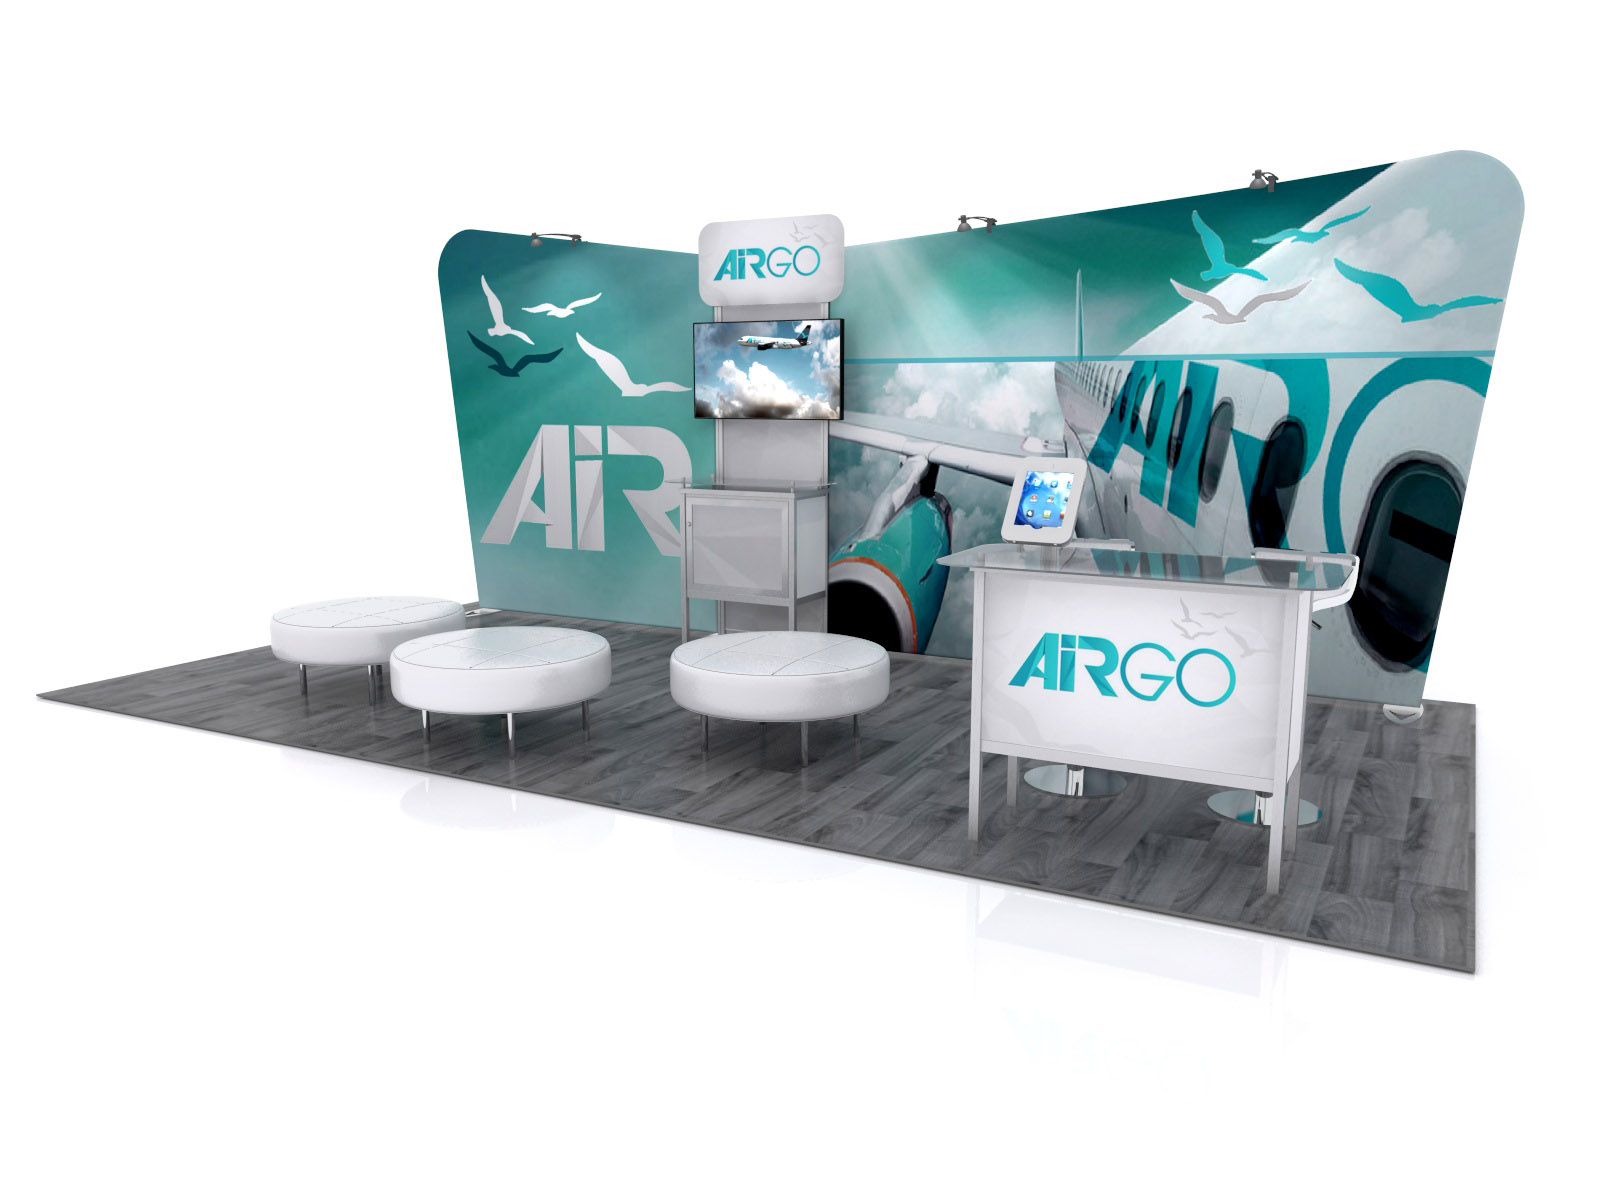 AirGo small trade show booth ideas